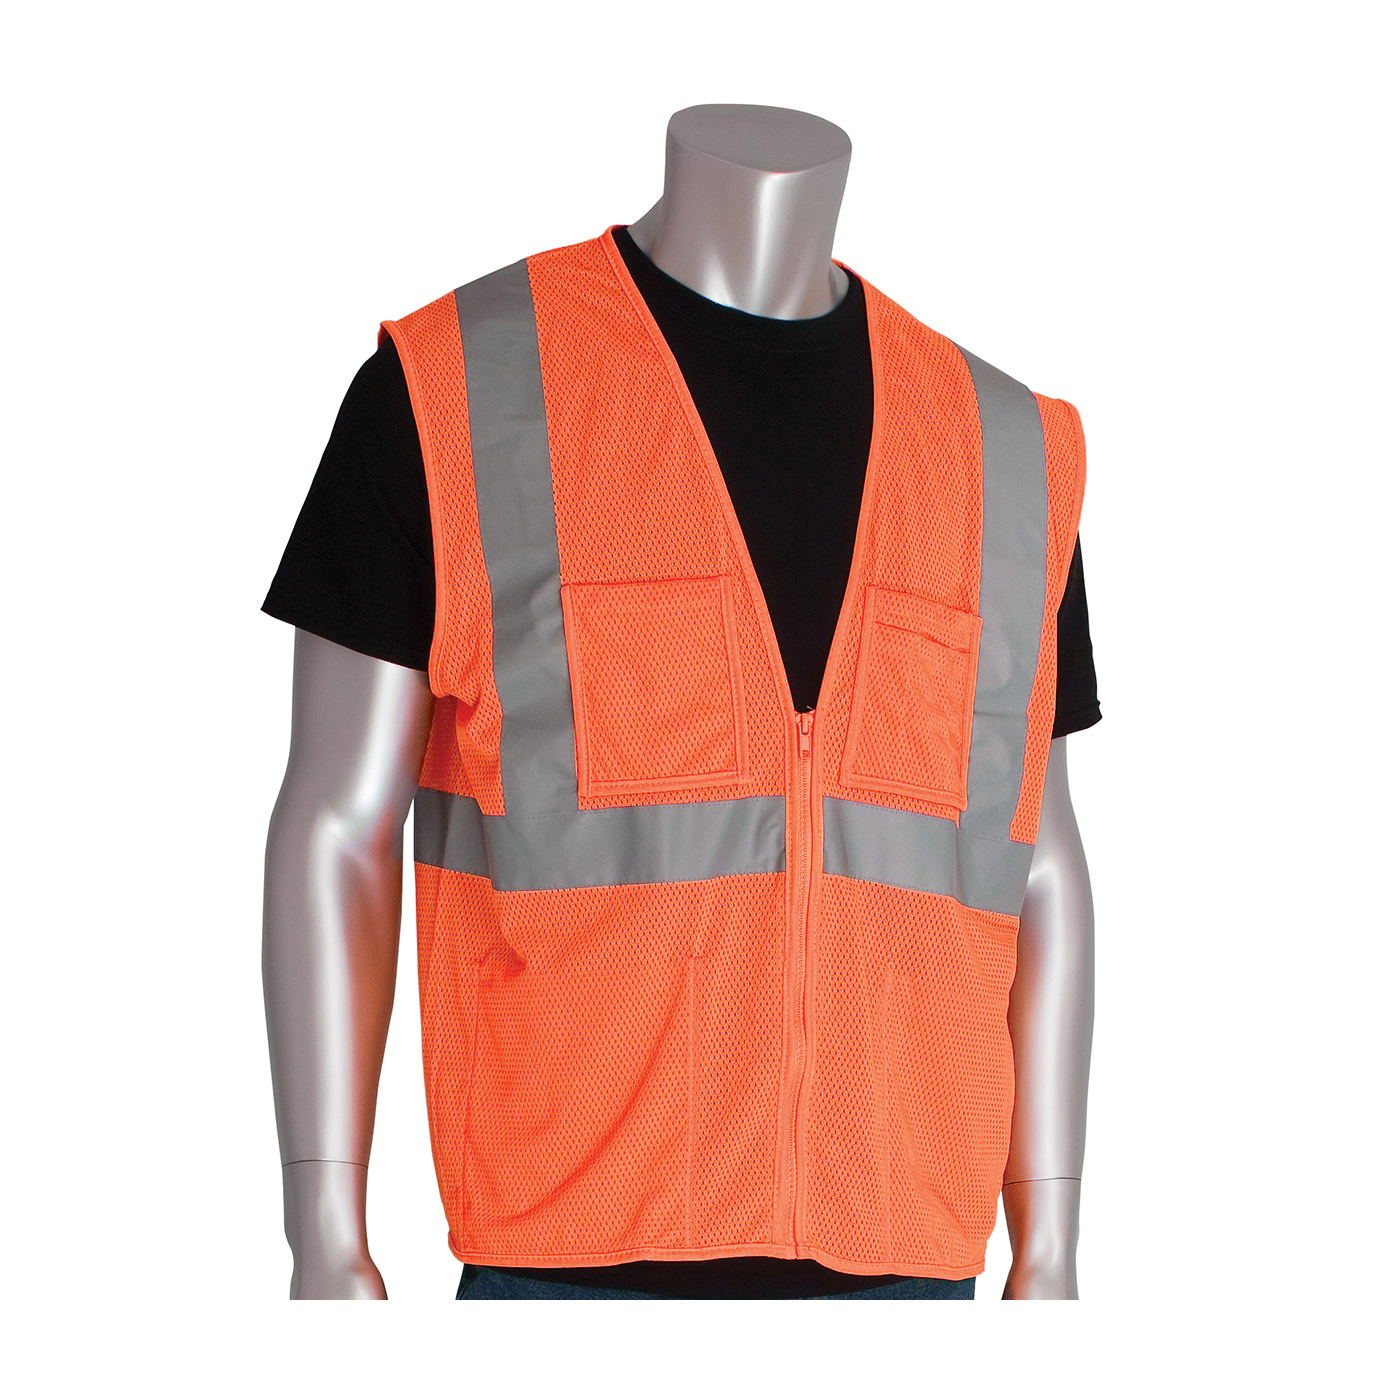 PIP® 302-MVGZ4POR-3X Safety Vest, 3XL, Hi-Viz Orange, Polyester Mesh, Zipper Closure, 4 Pockets, ANSI Class: Class 2, Specifications Met: ANSI 107 Type R